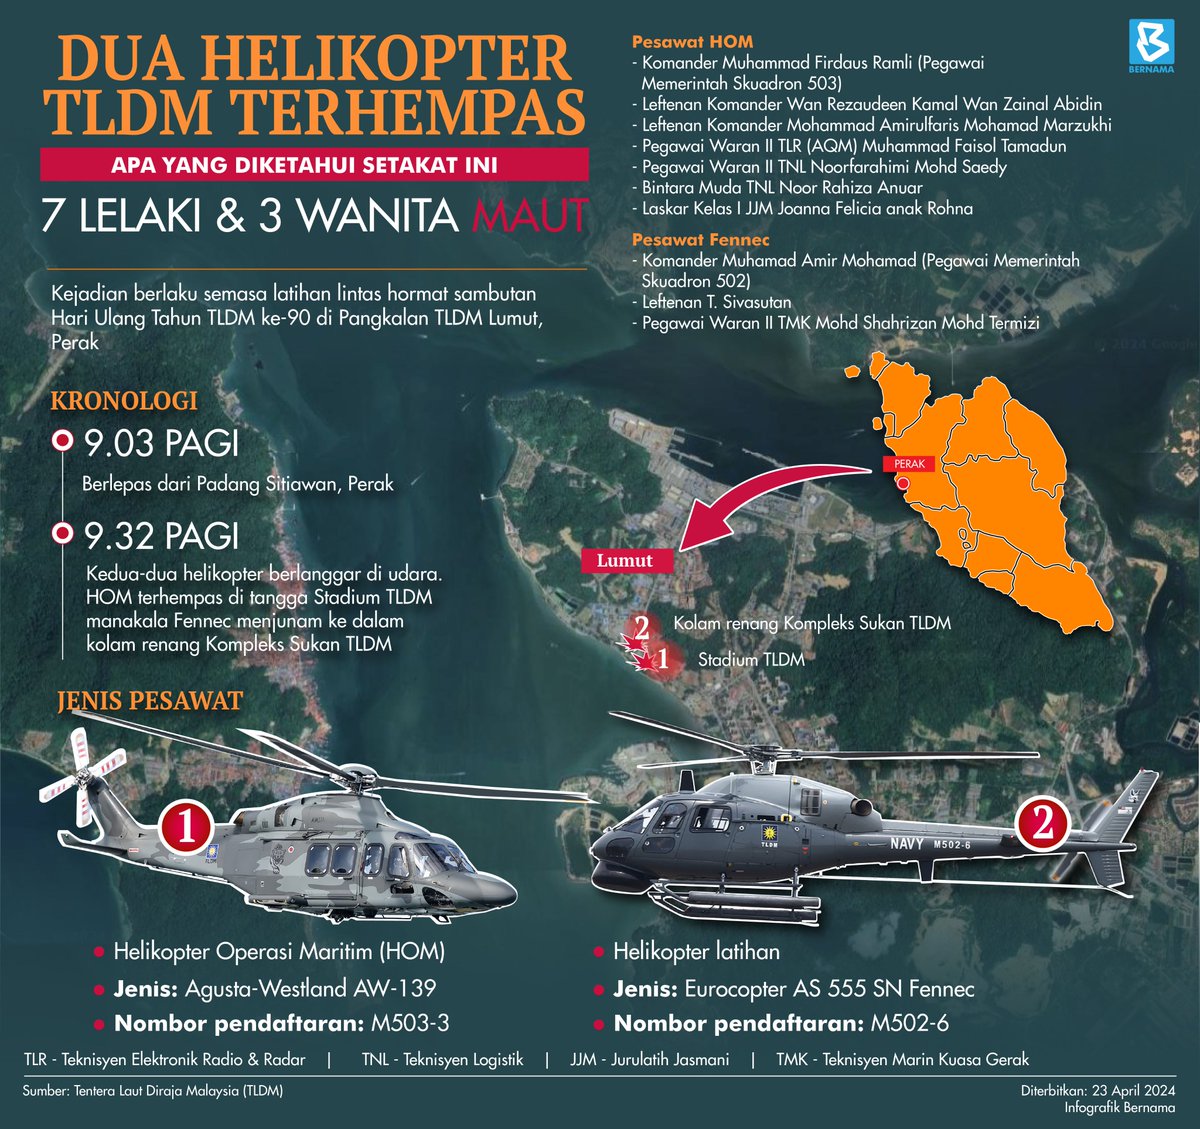 Dua helikopter TLDM terhempas

#InfografikBernama #BernamaNews 
#nahashelikopter @tldm_rasmi